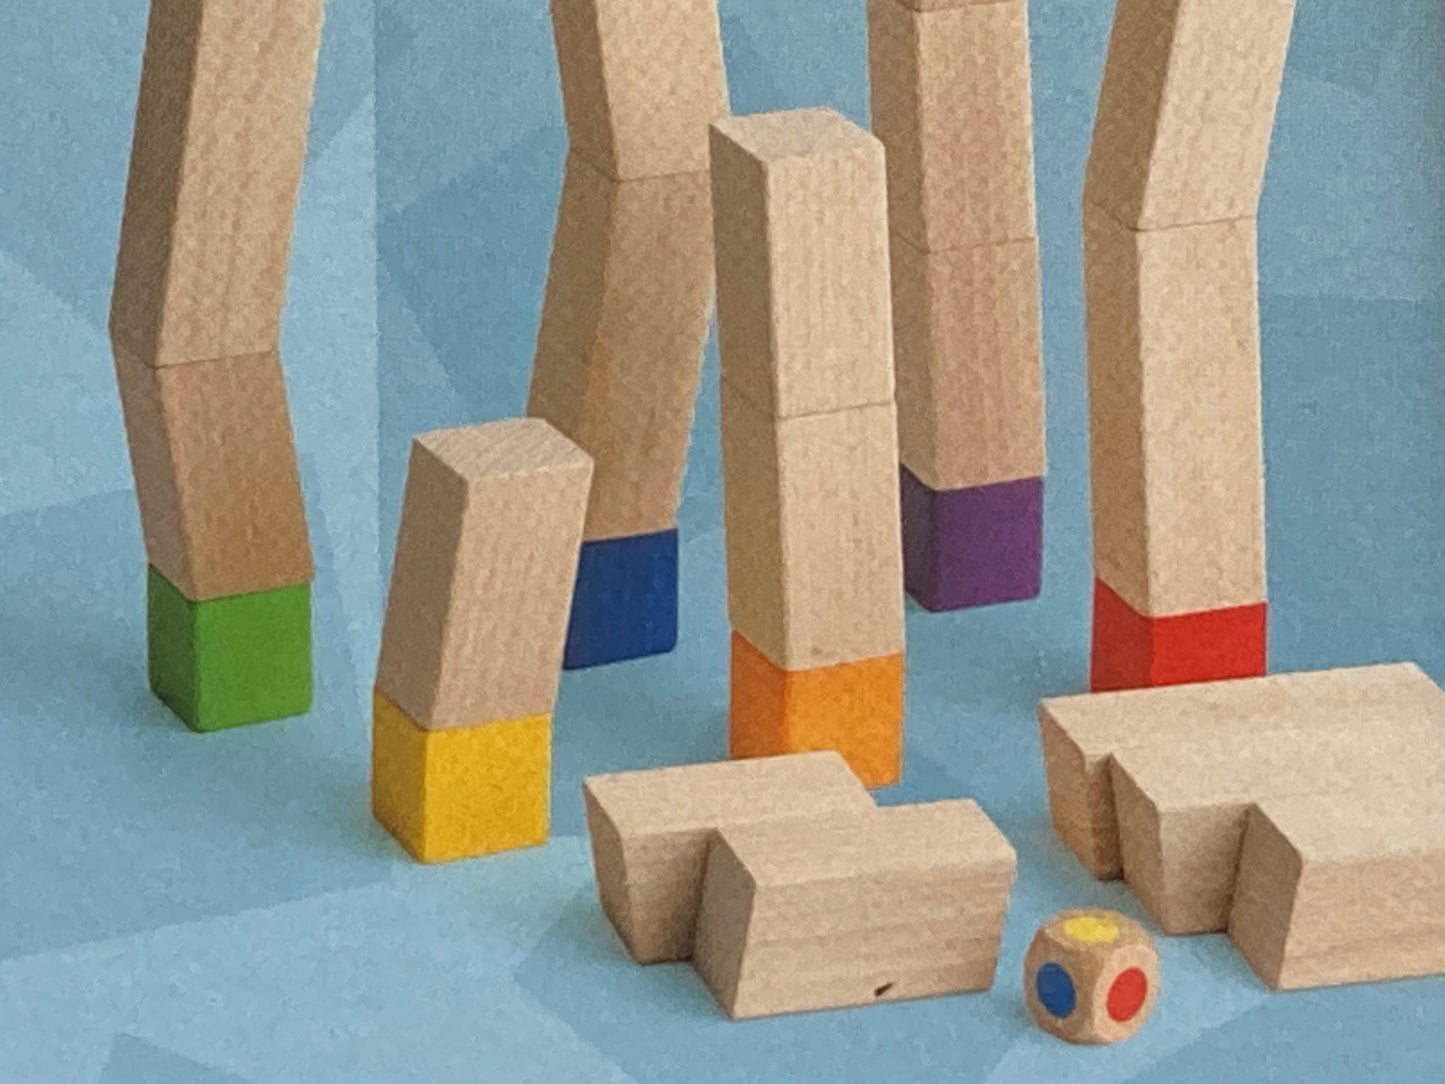 Wooden Family Game Set - TRICKY BLOCKS by Erzi